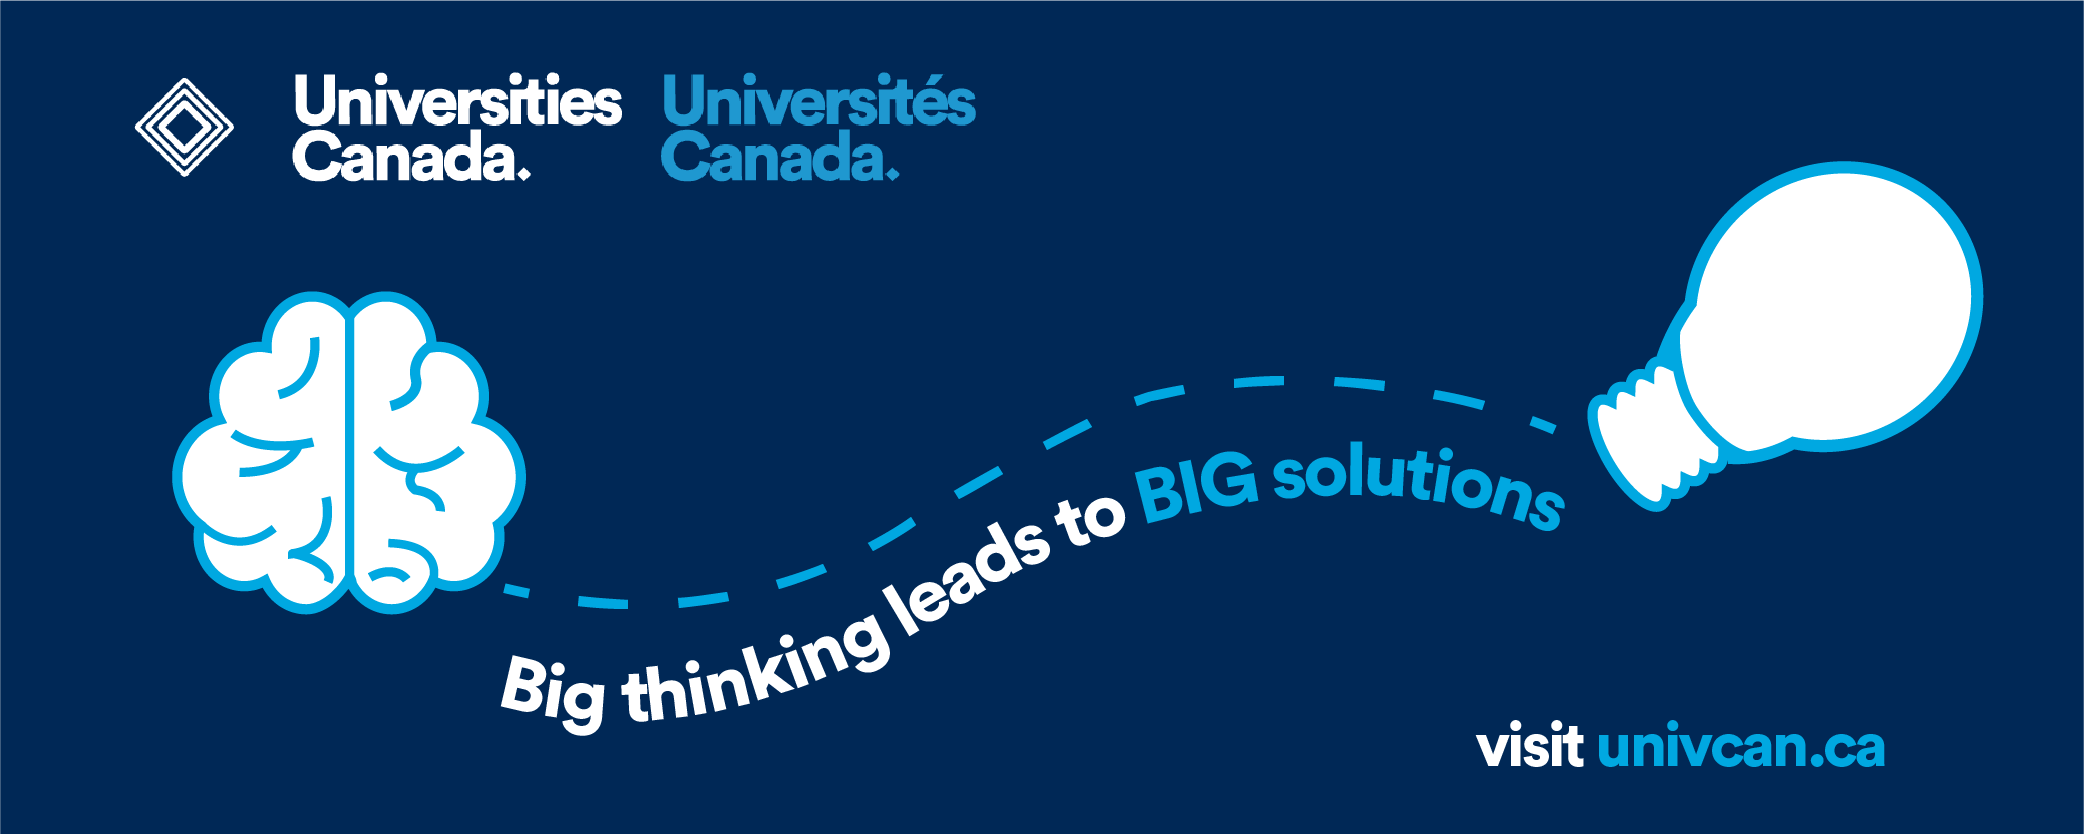 Universities Canada advertisment